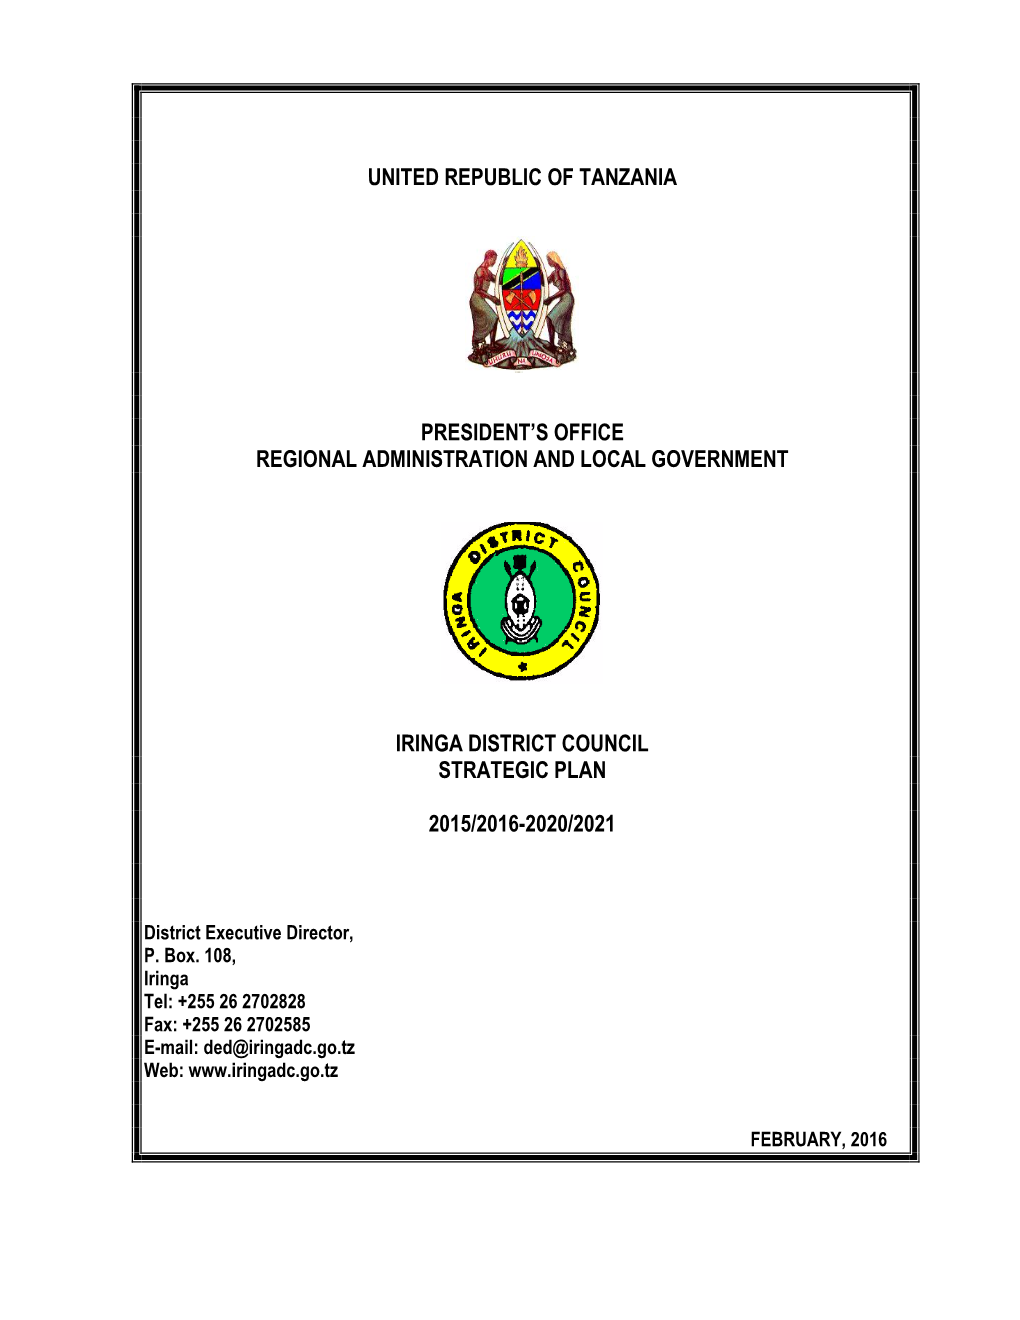 United Republic of Tanzania President's Office Regional